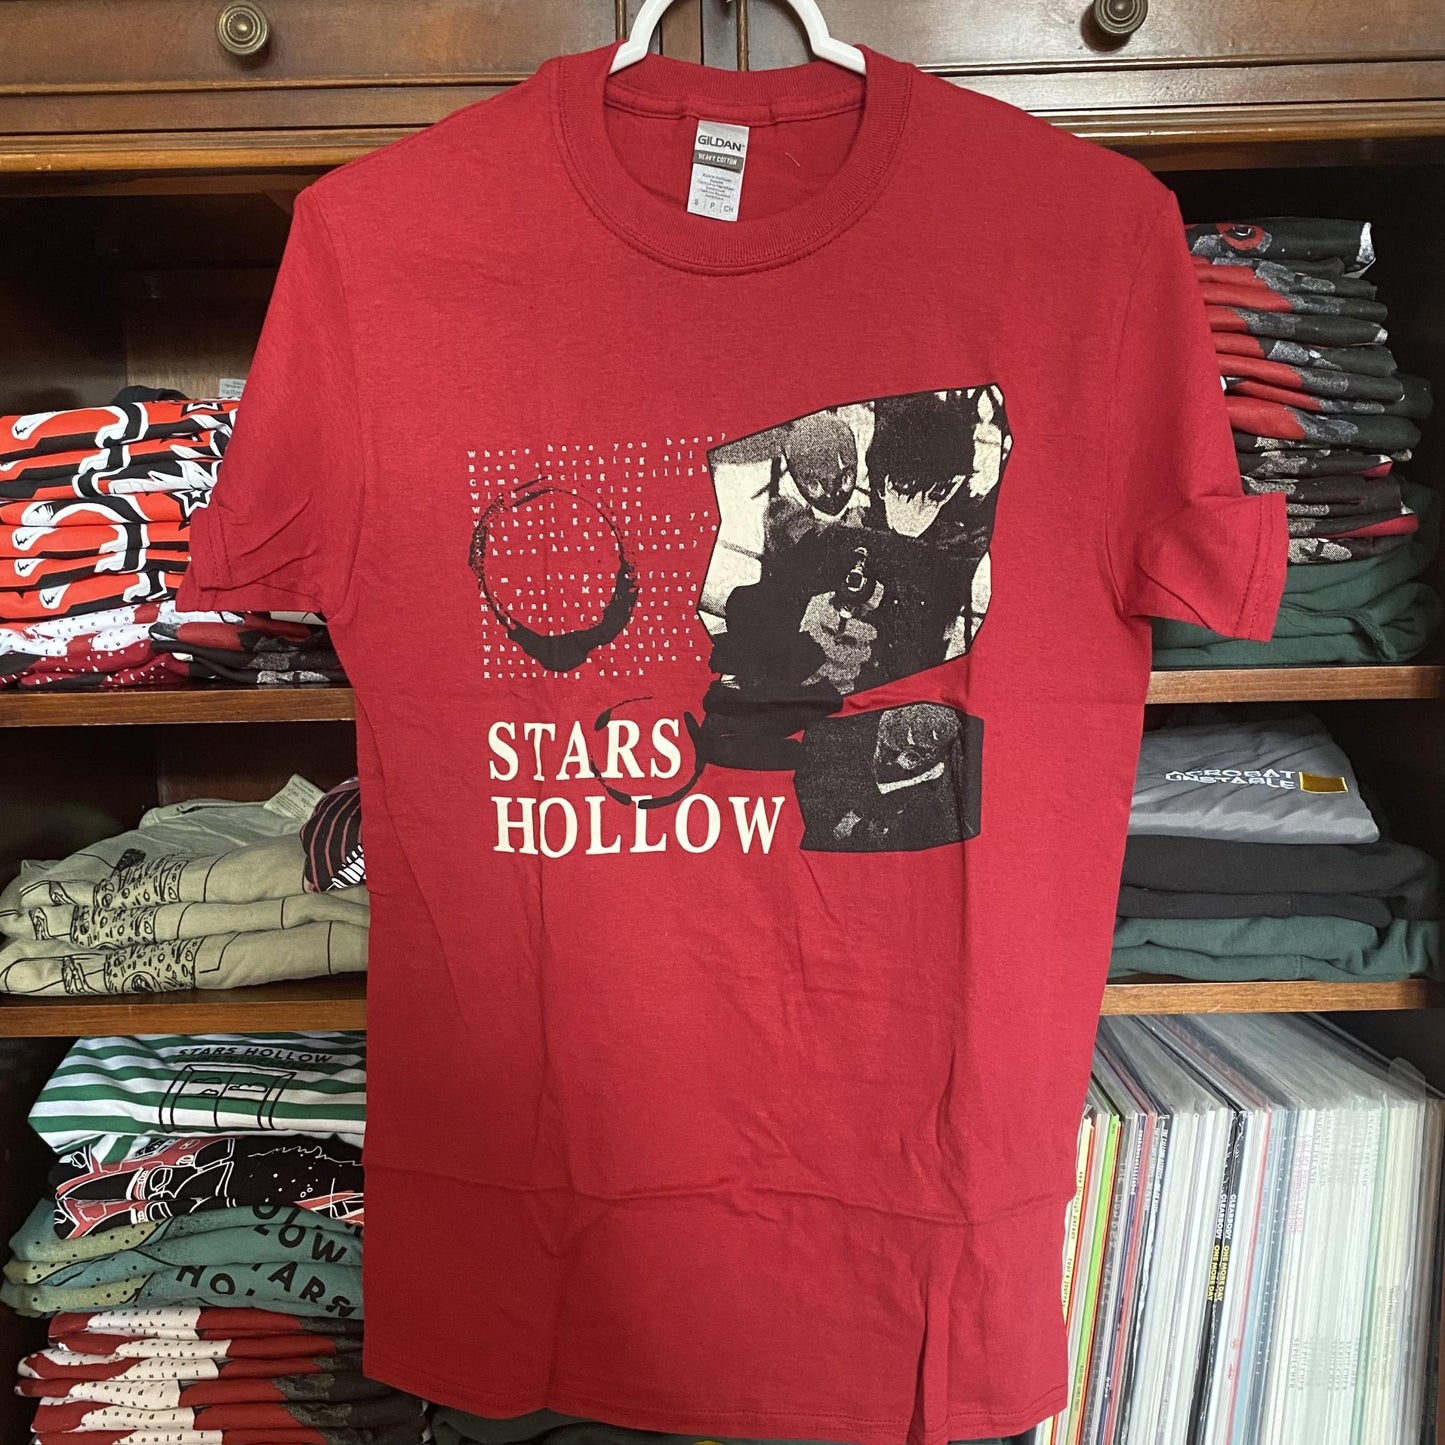 Stars Hollow - "Joker" shirt - Acrobat Unstable Records